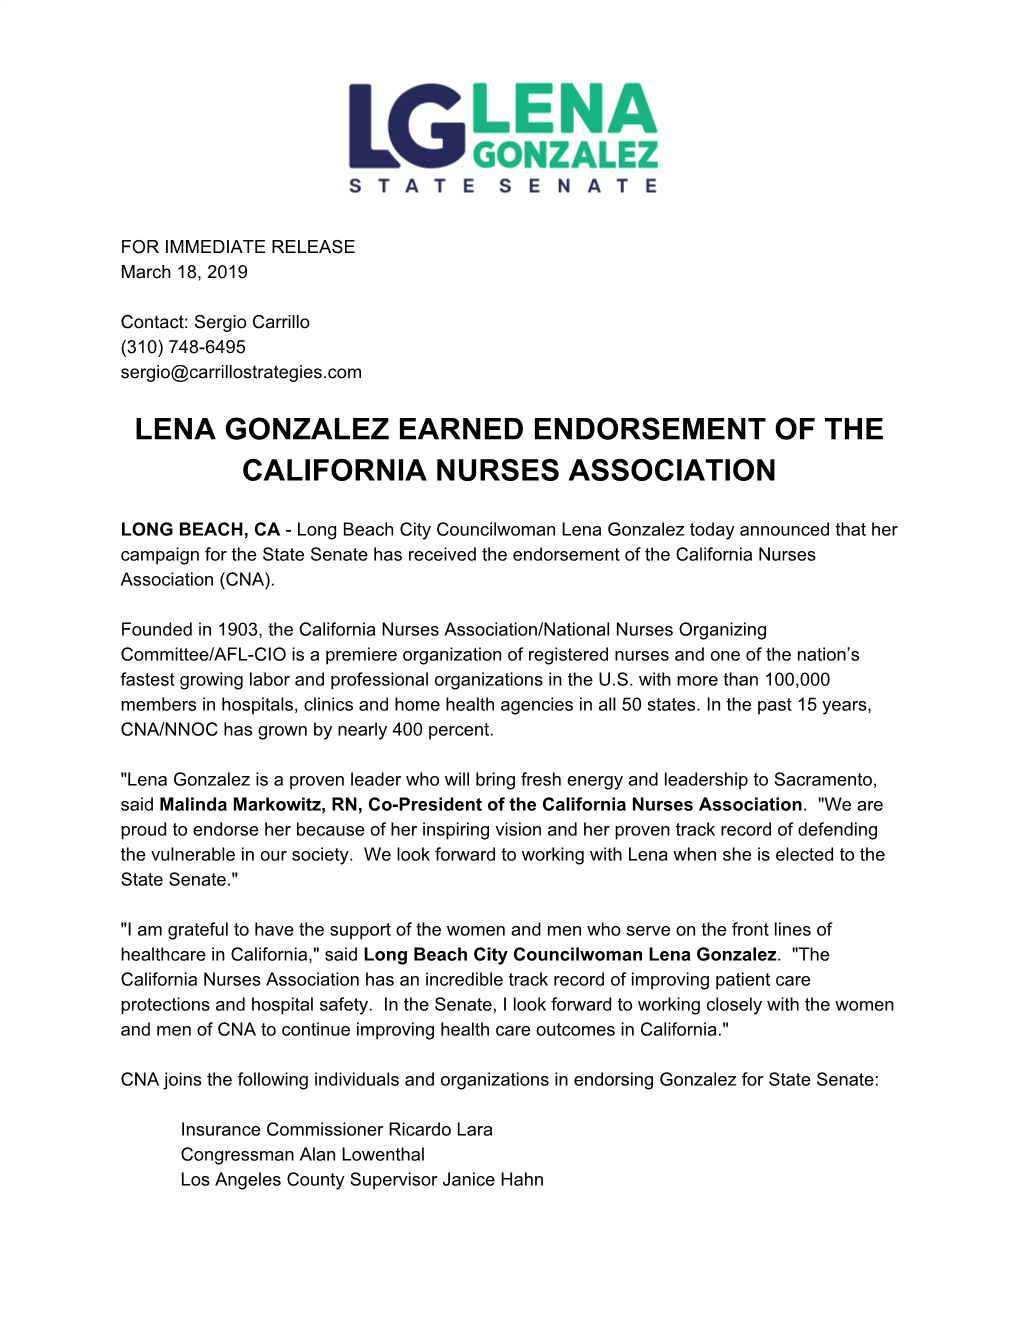 Lena Gonzalez Earned Endorsement of the California Nurses Association